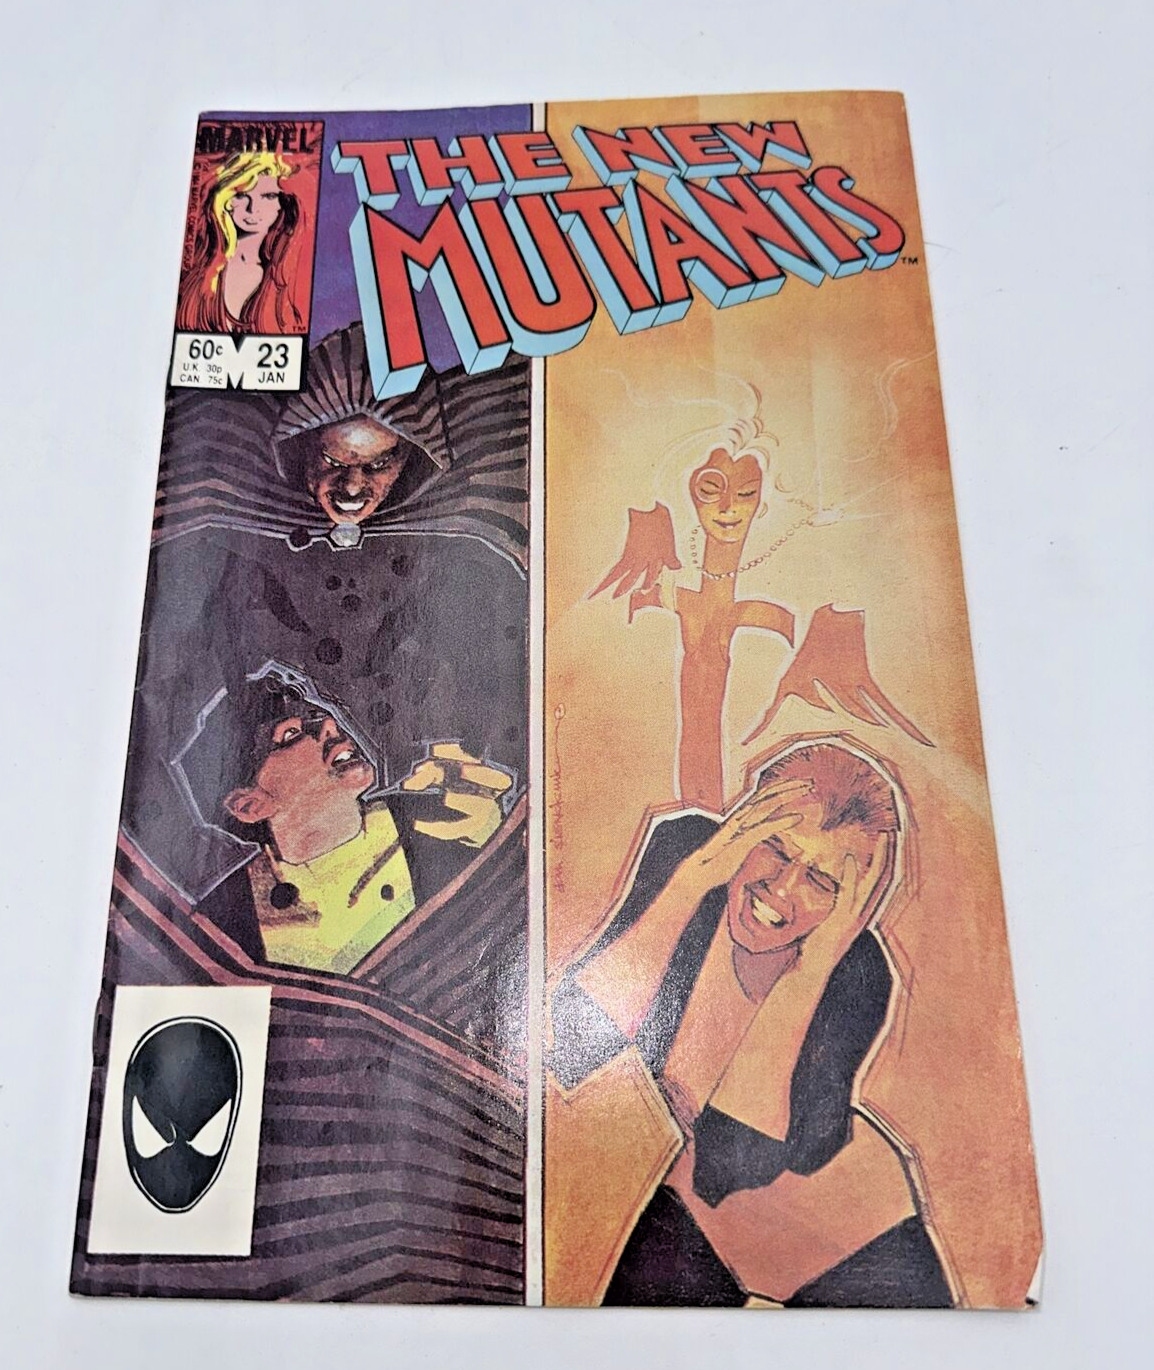 The New Mutants #23 Jan 1984 Sienkiewicz - Claremont Marvel Comics